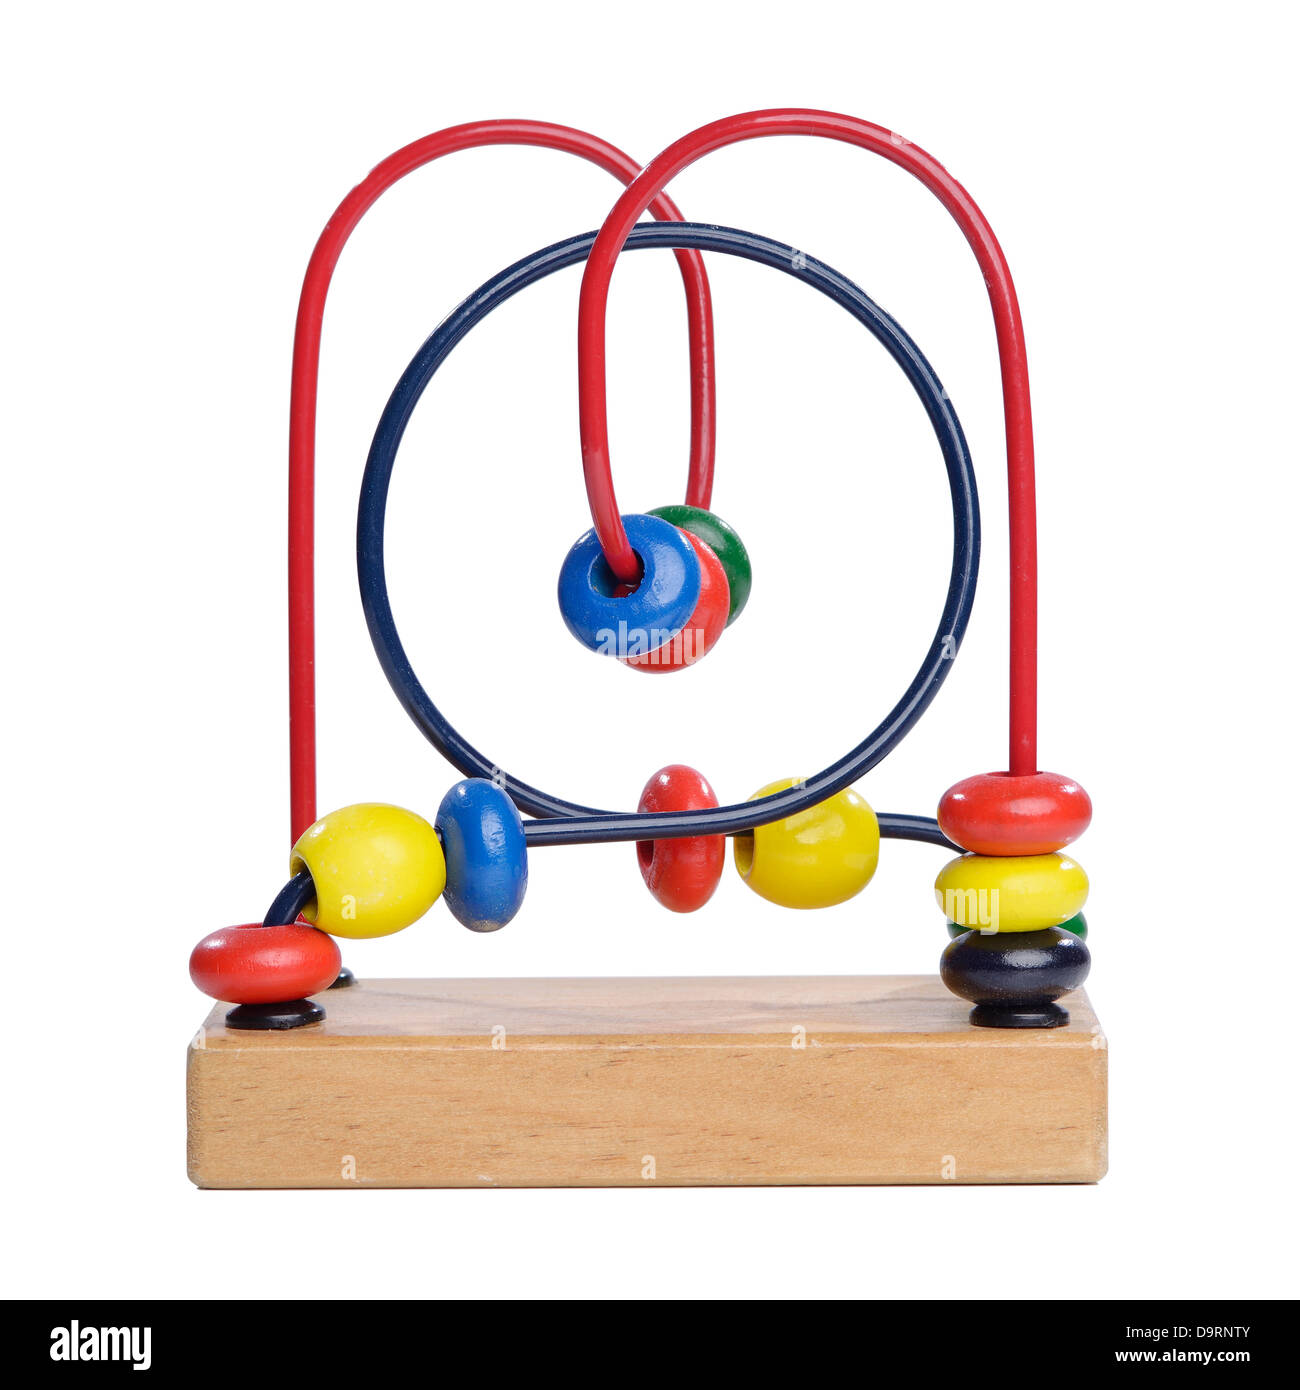 Wooden bead maze toy Stock Photo